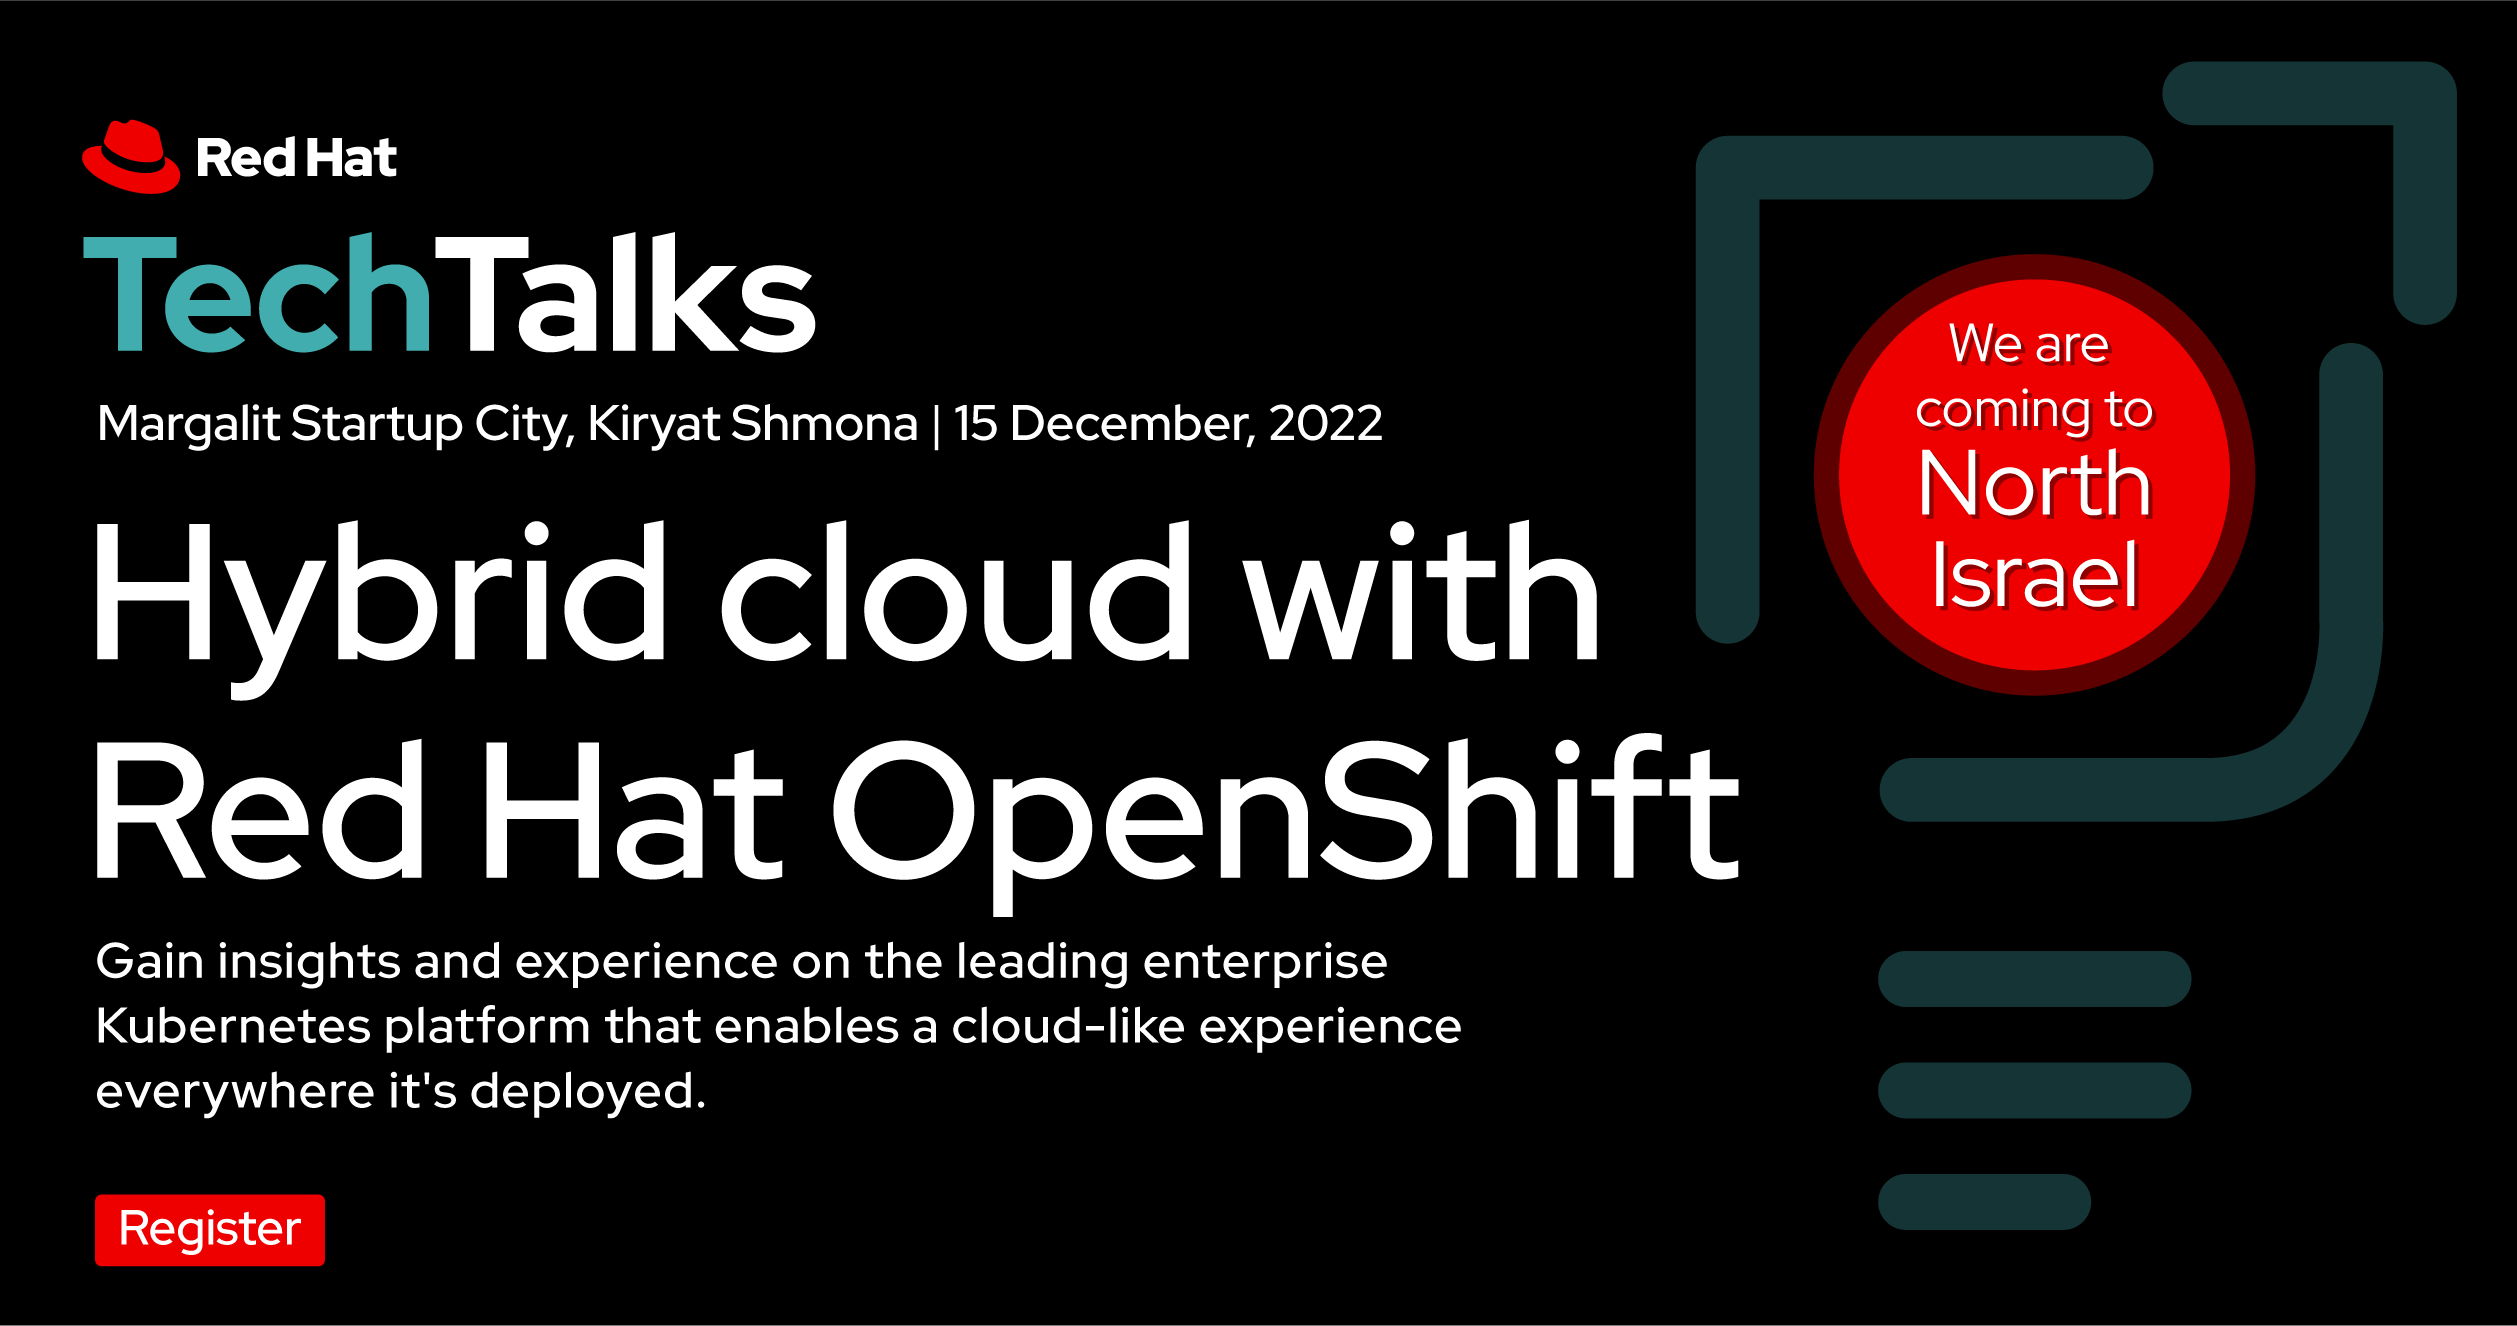 RedHat TechTalk Hybrid Cloud With OpenShift 2